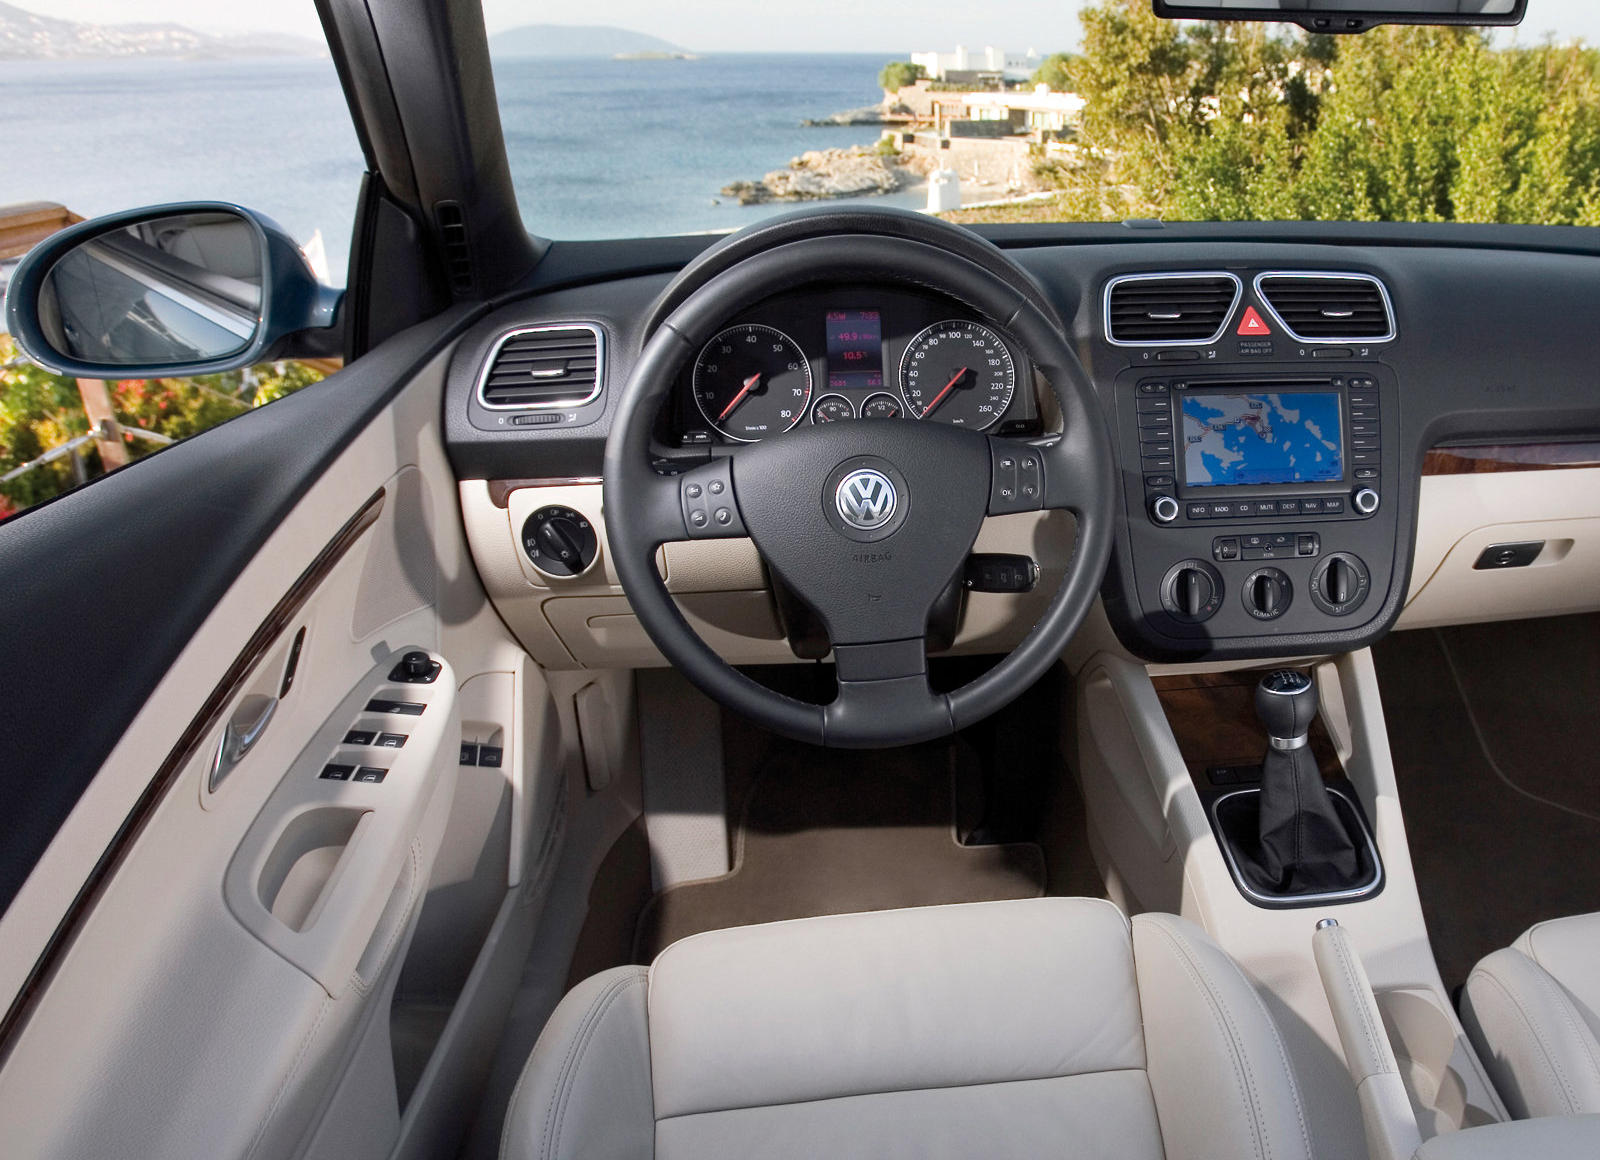 2008 Volkswagen Eos Interior Photos | CarBuzz